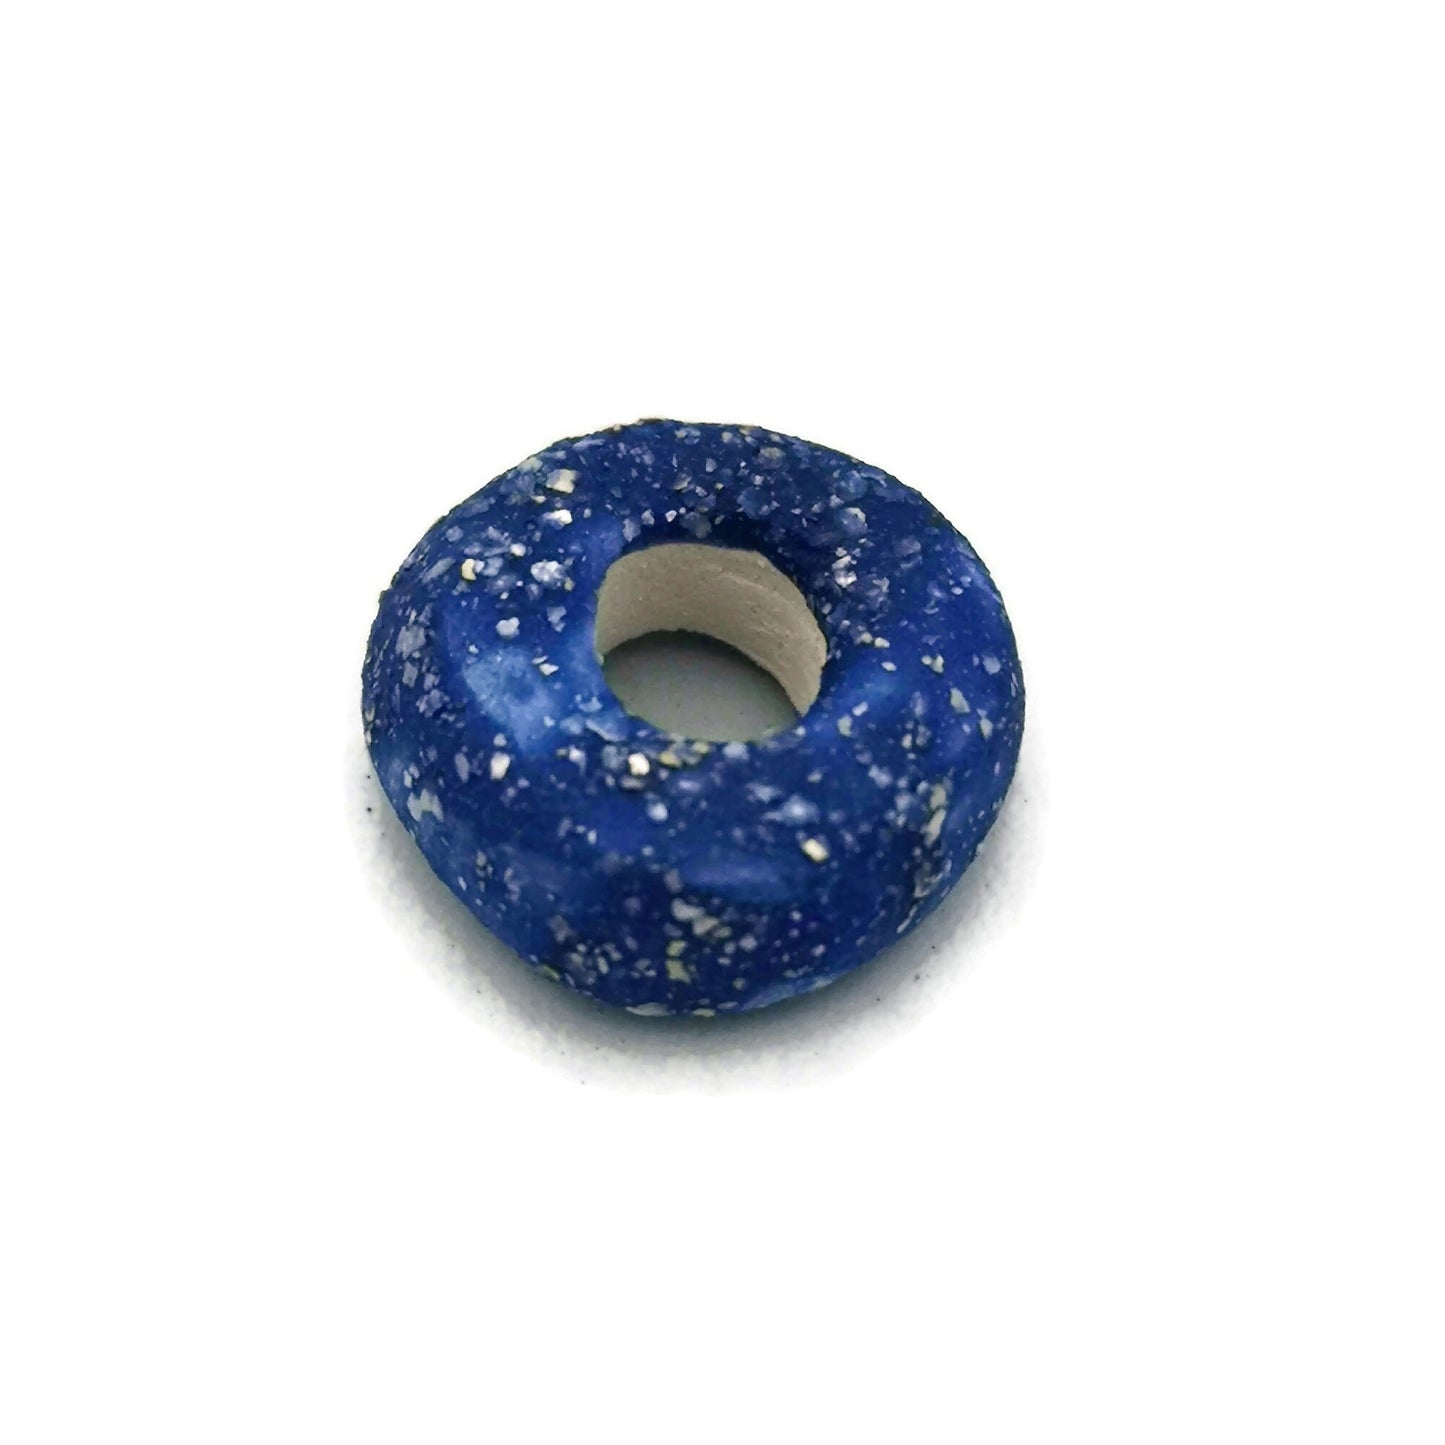 7 Pcs Clay Beads Large Hole, Handmade Ceramic Beads Jewelry Making, Porcelain Dreadlock Beads, Unique Donut Bead Unusual - Ceramica Ana Rafael